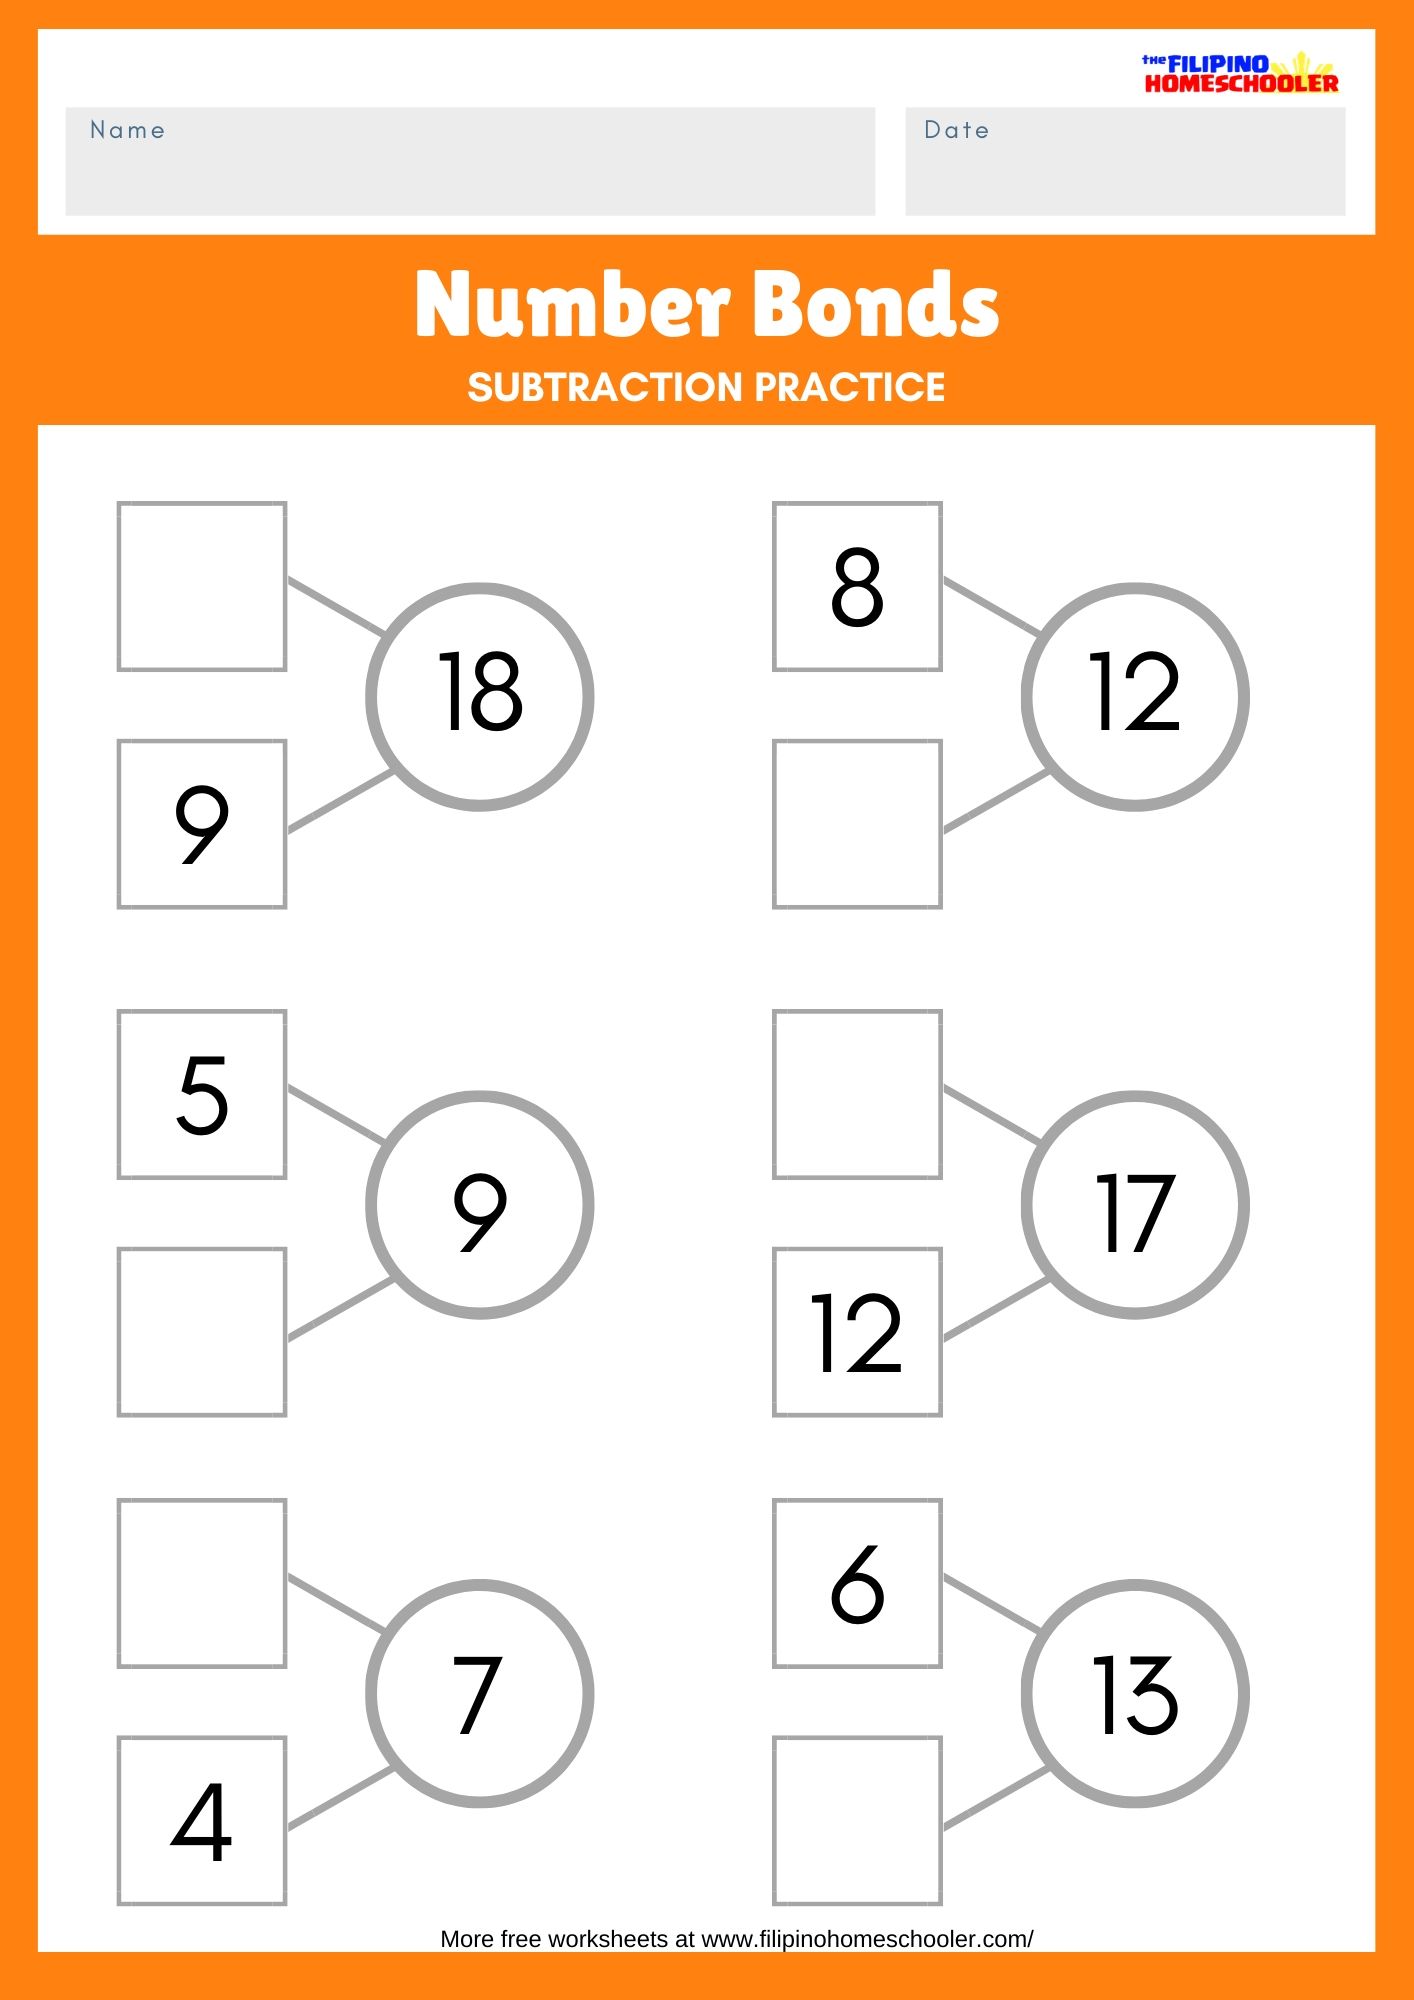 How To Teach Subtraction Using Number Bonds The Filipino Homeschooler